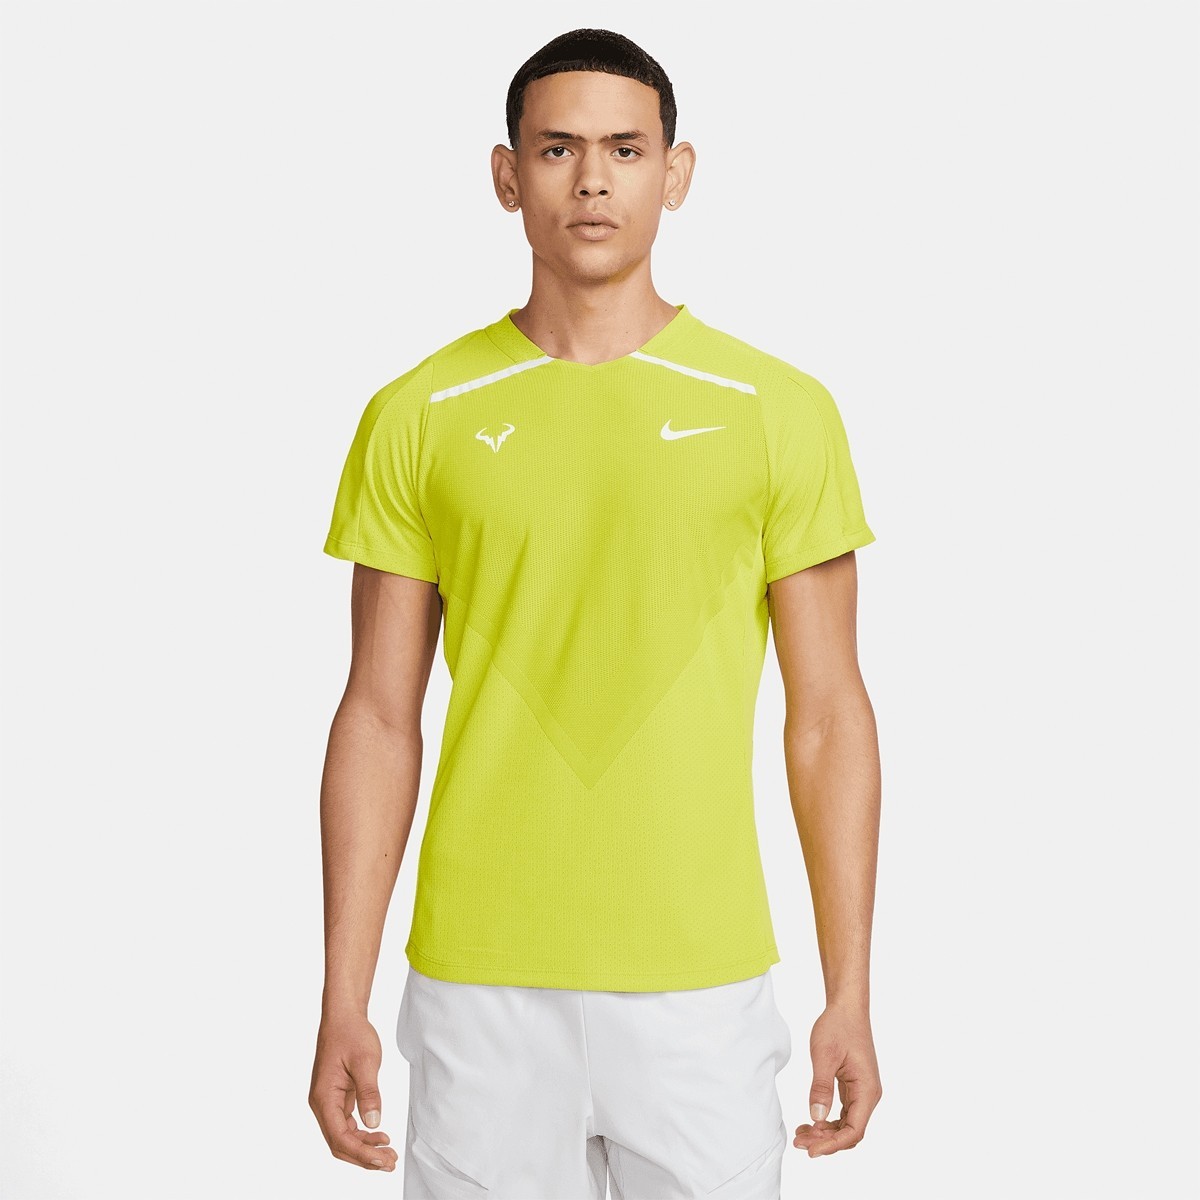 Теннисная футболка мужская Nike Court Advantage Rafa Top bright cactus/white